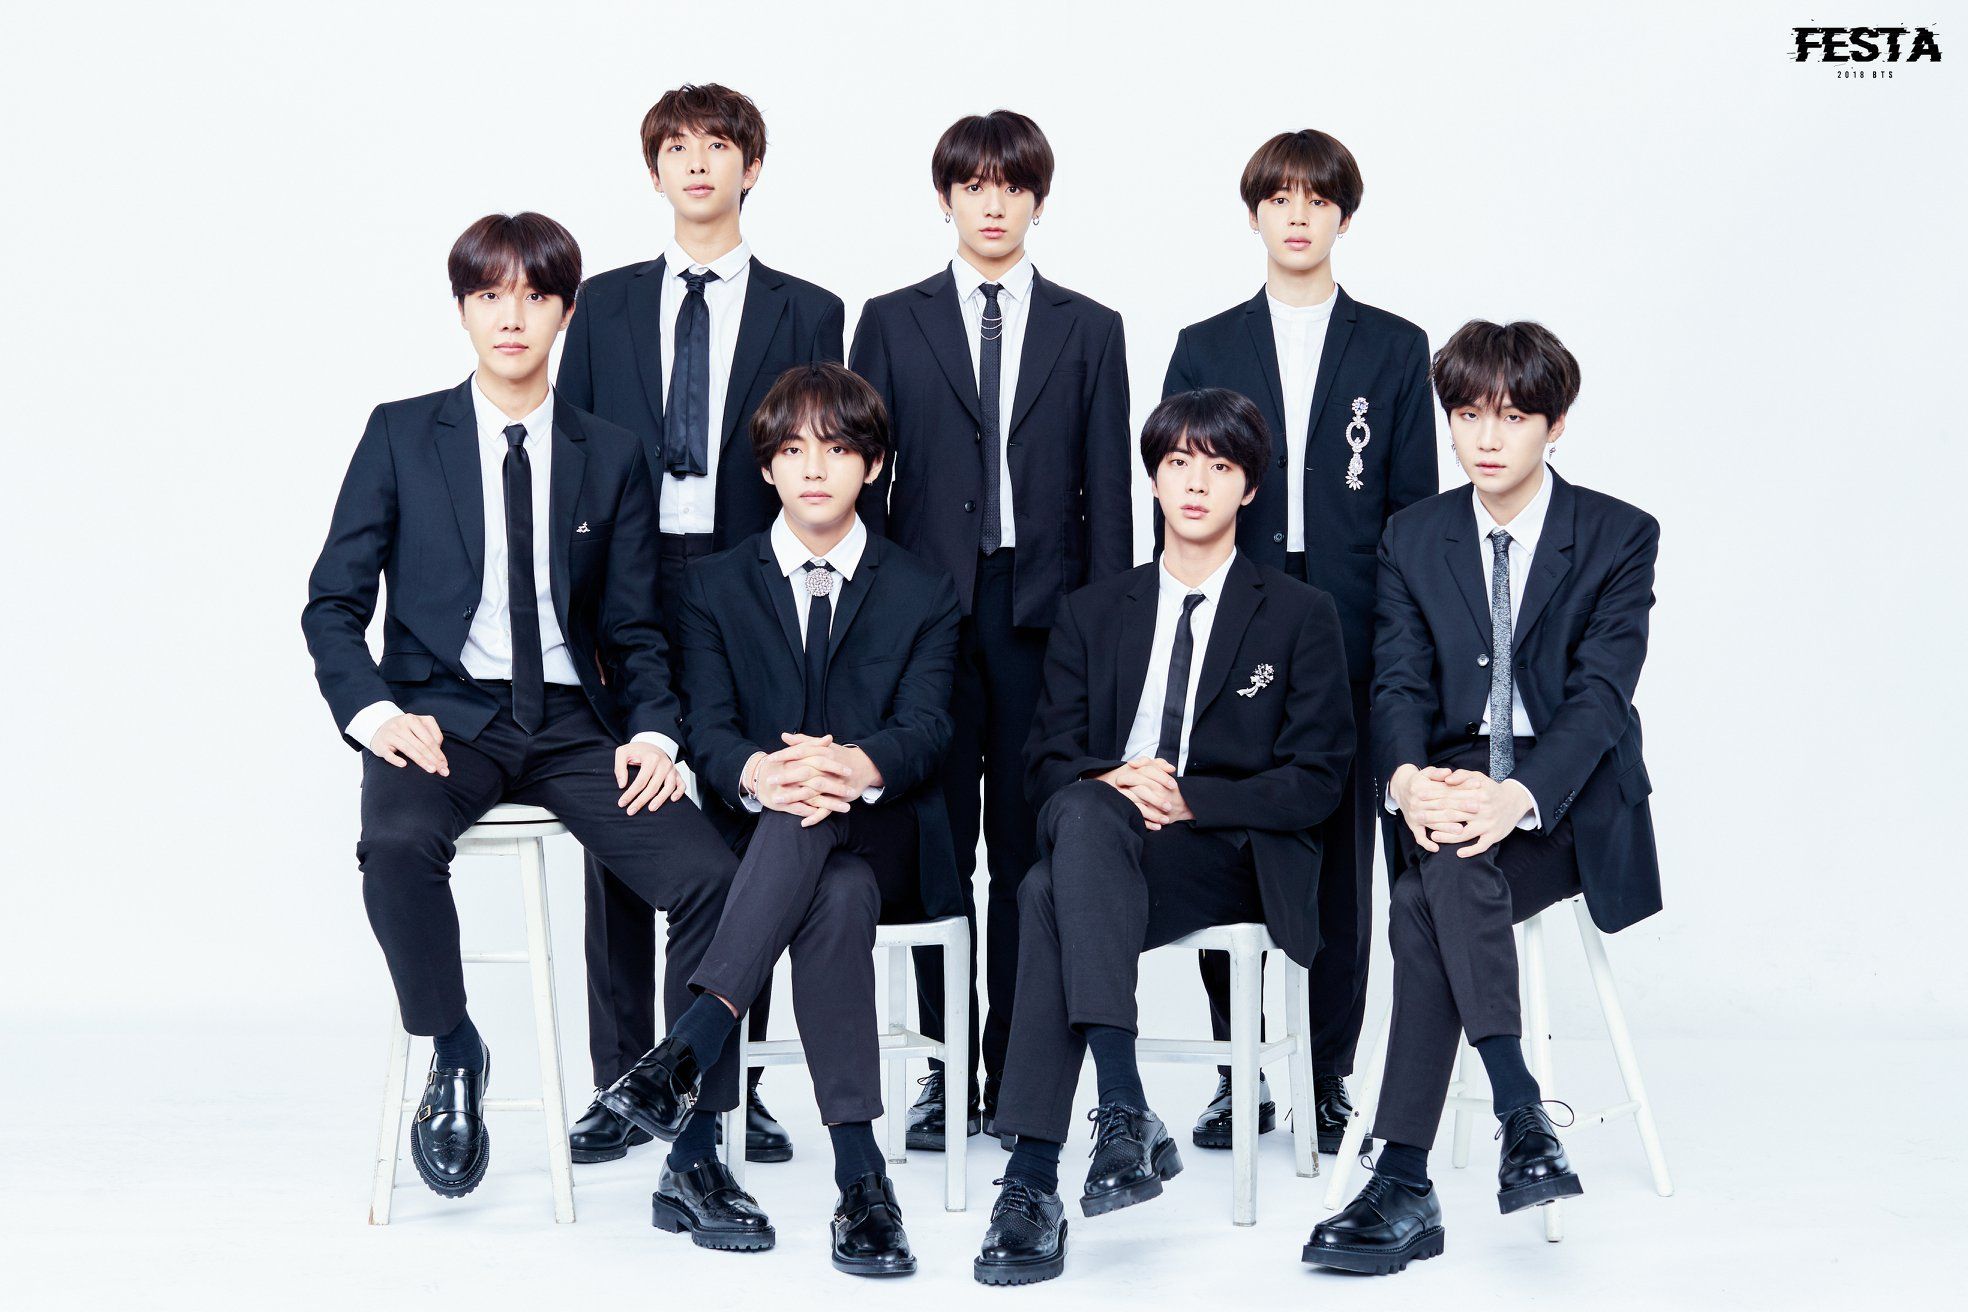 BTS Updates Their Family Album With New Photo For 2018 BTS Festa